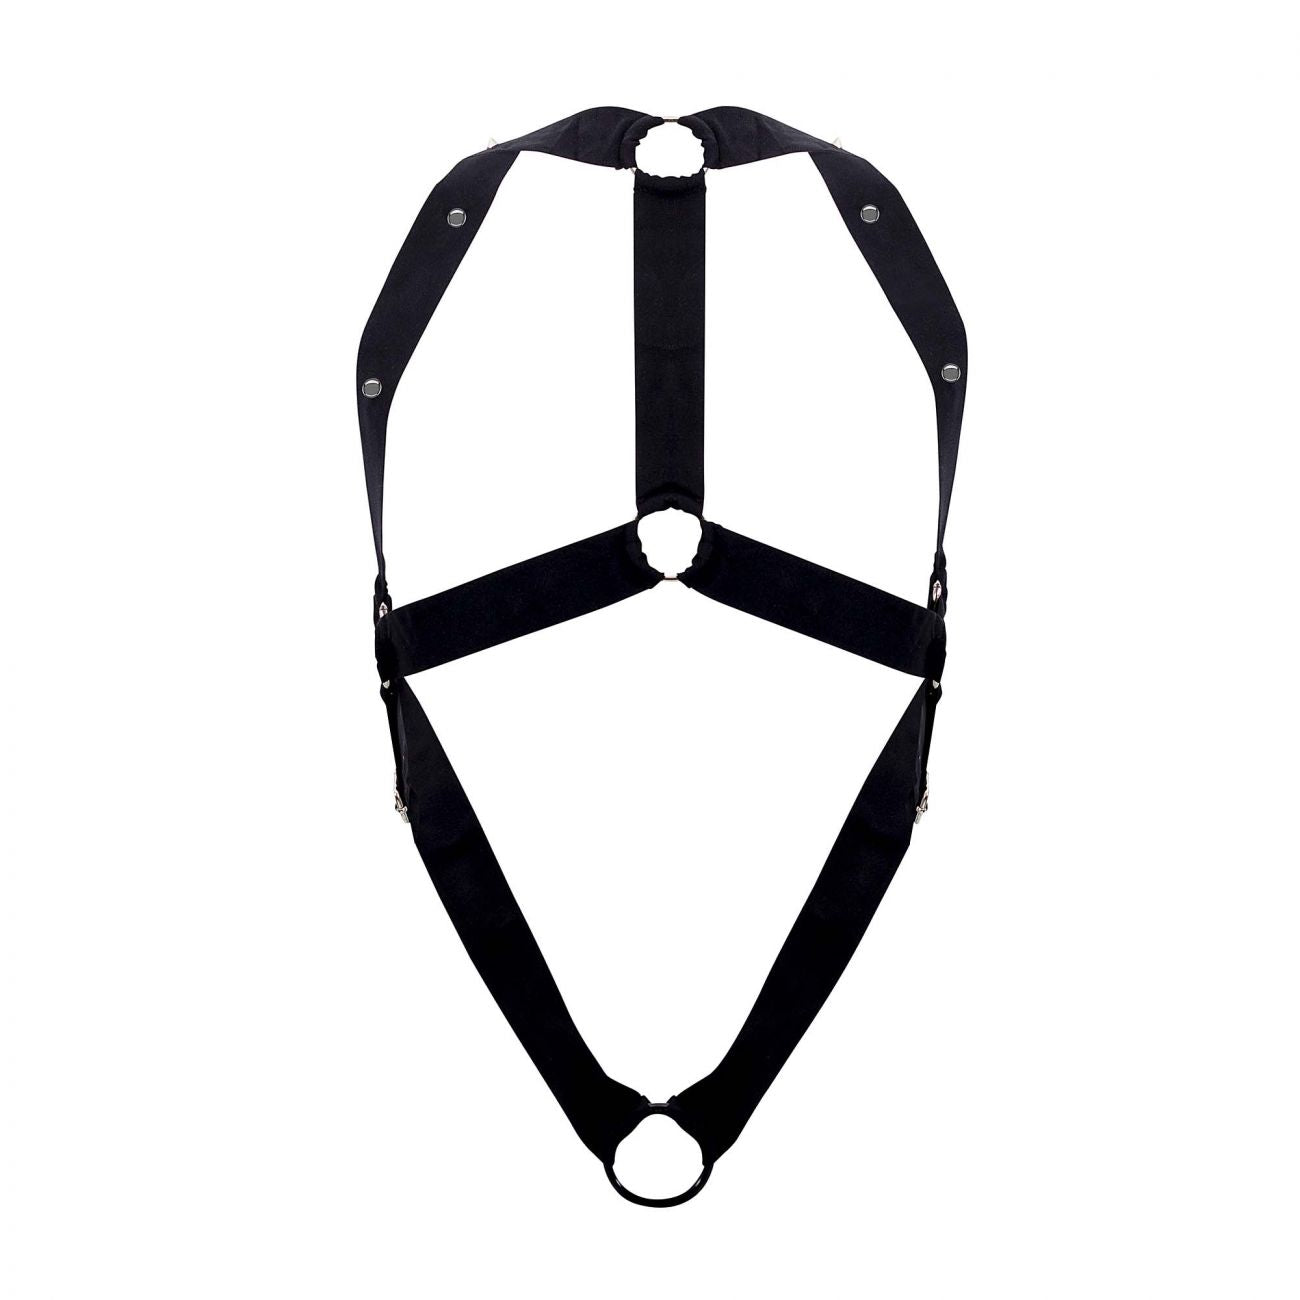 Xtremen 91108 C-Ring Harness Black